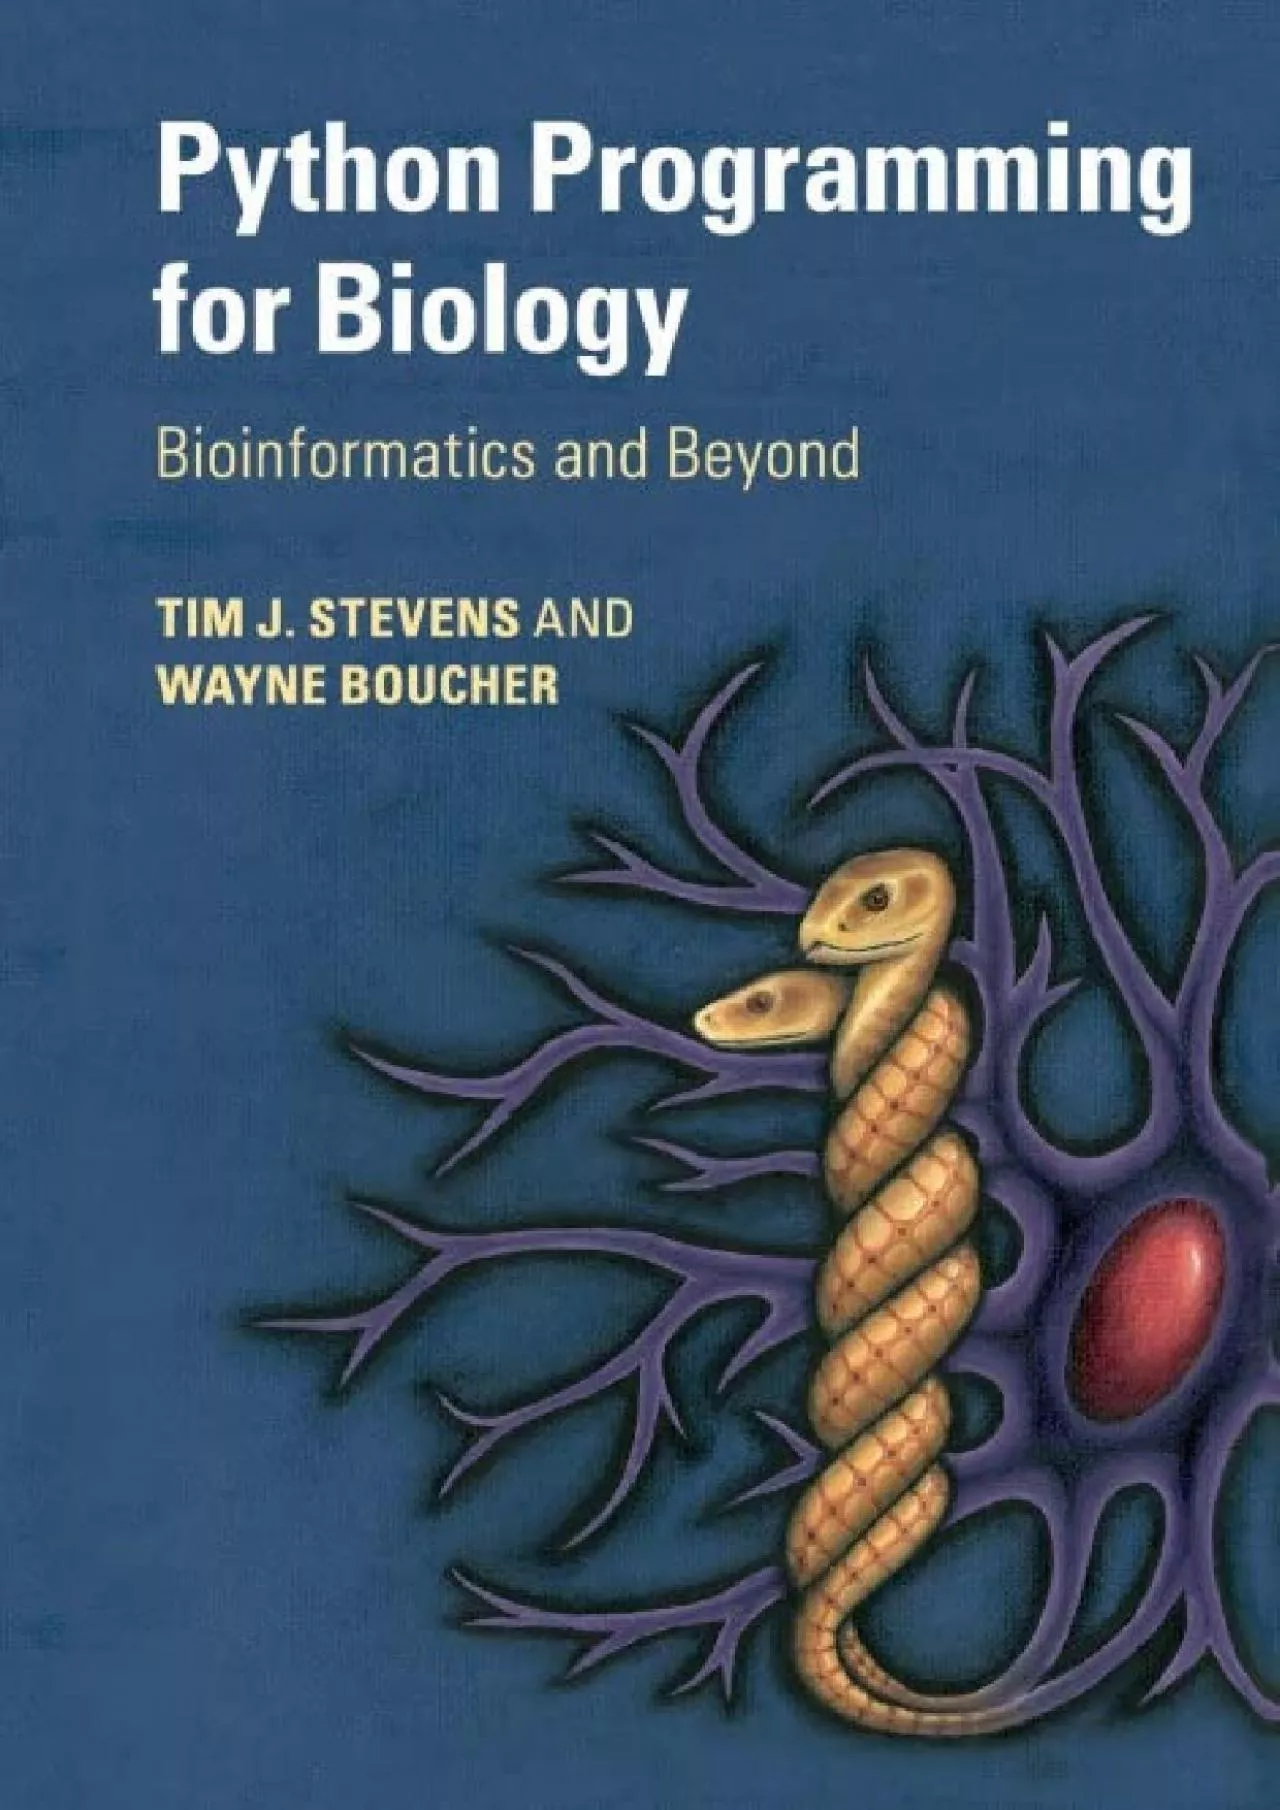 [READING BOOK]-Python Programming for Biology: Bioinformatics and Beyond